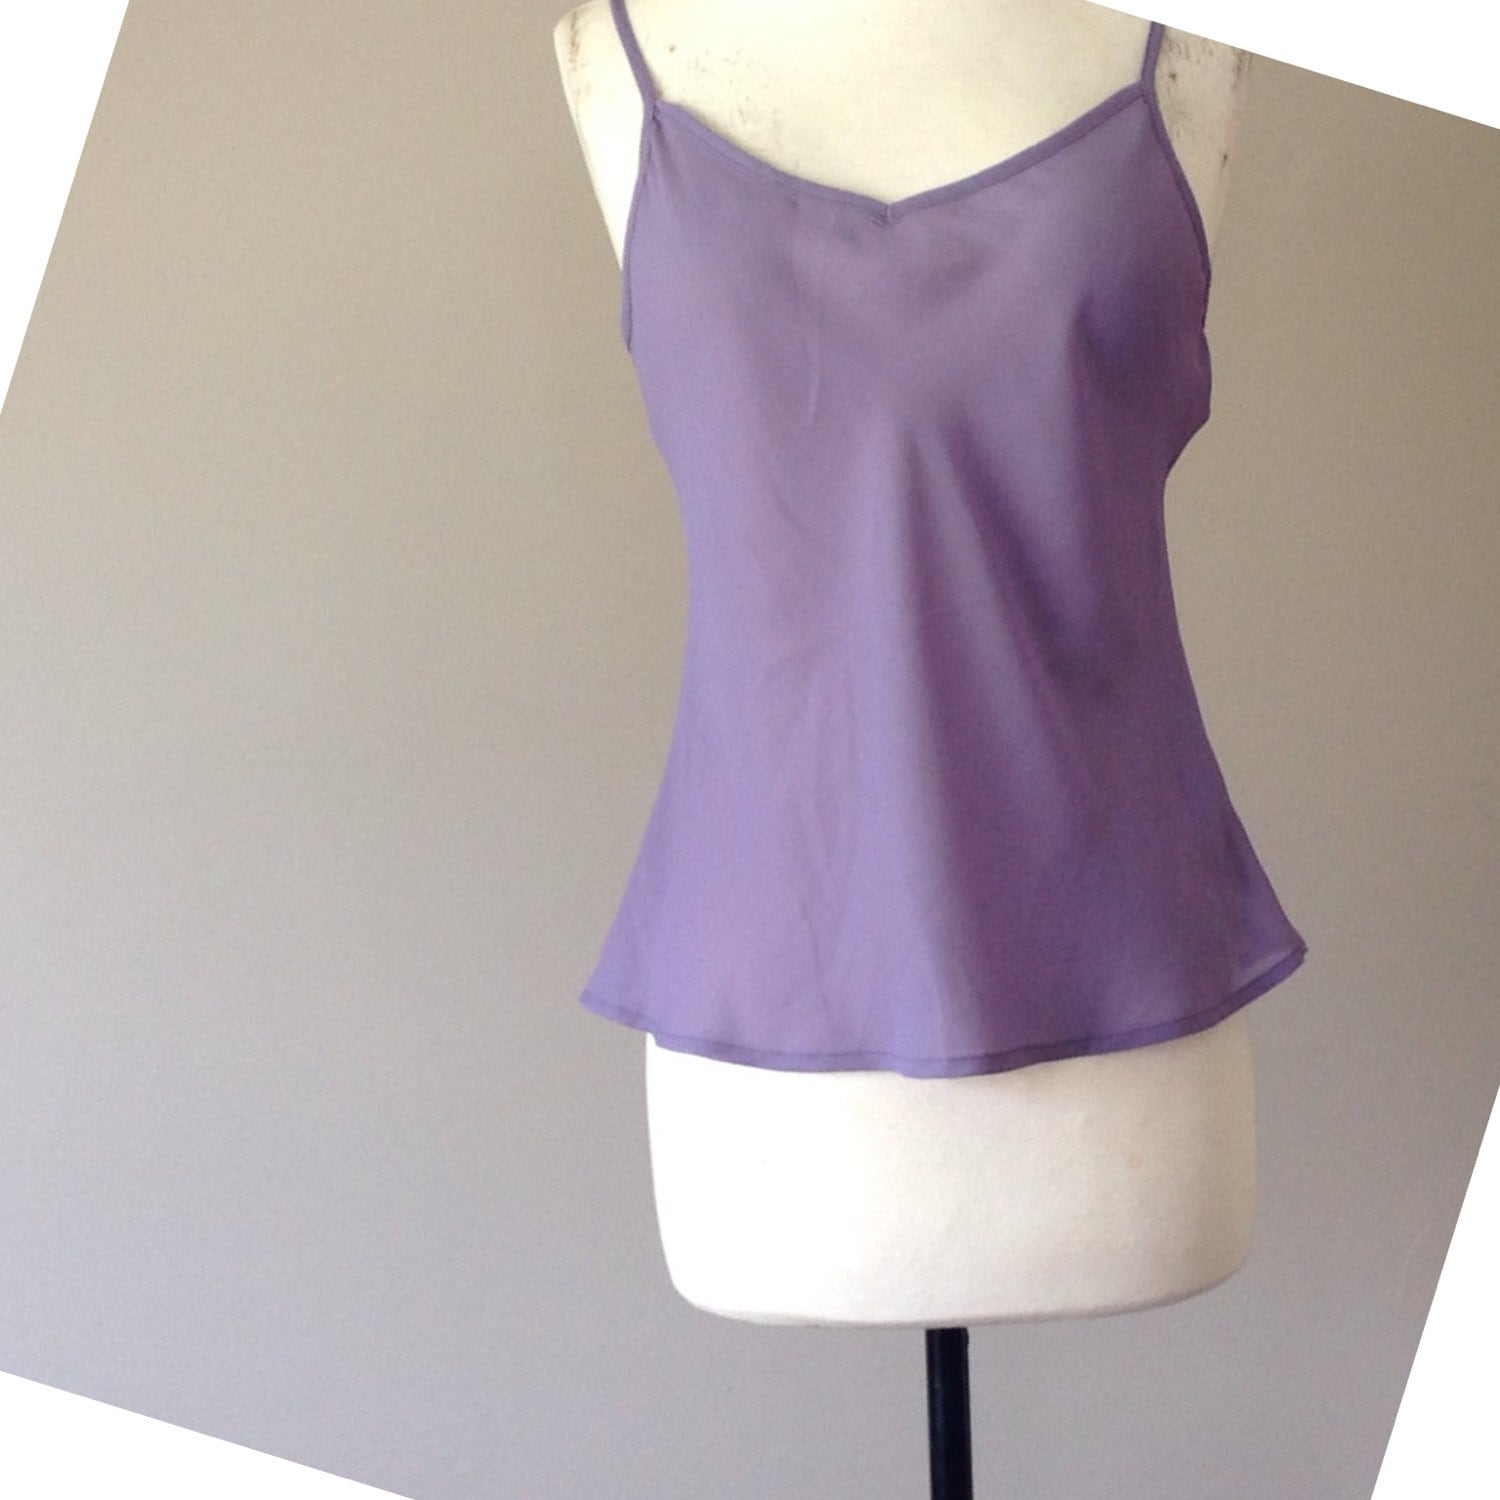 sheer chiffon camisole lingerie top / purple cami tank by LustNLux